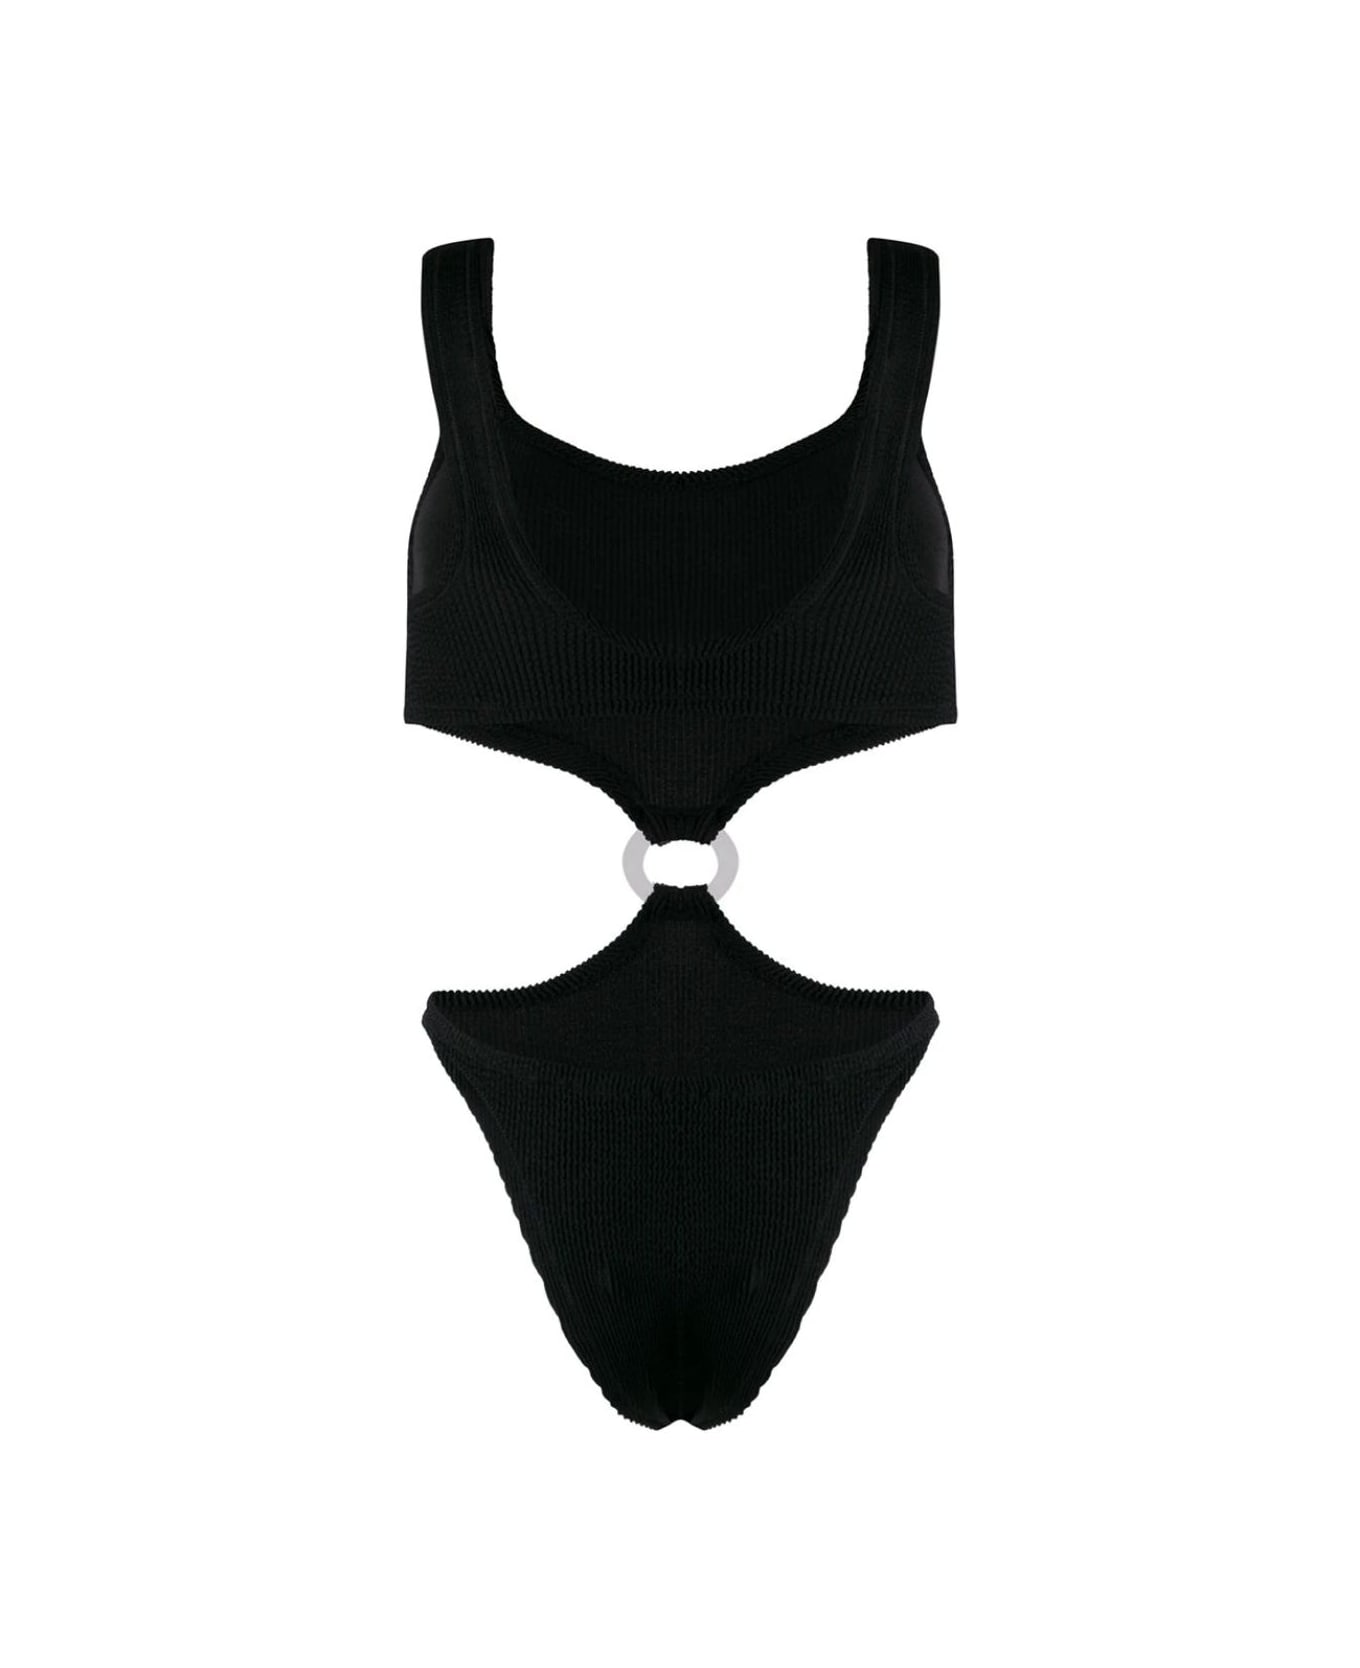 Reina Olga Rein Olga Woman's One-piece Swimsuit In Black Fine Ribbed Knit - Non definito